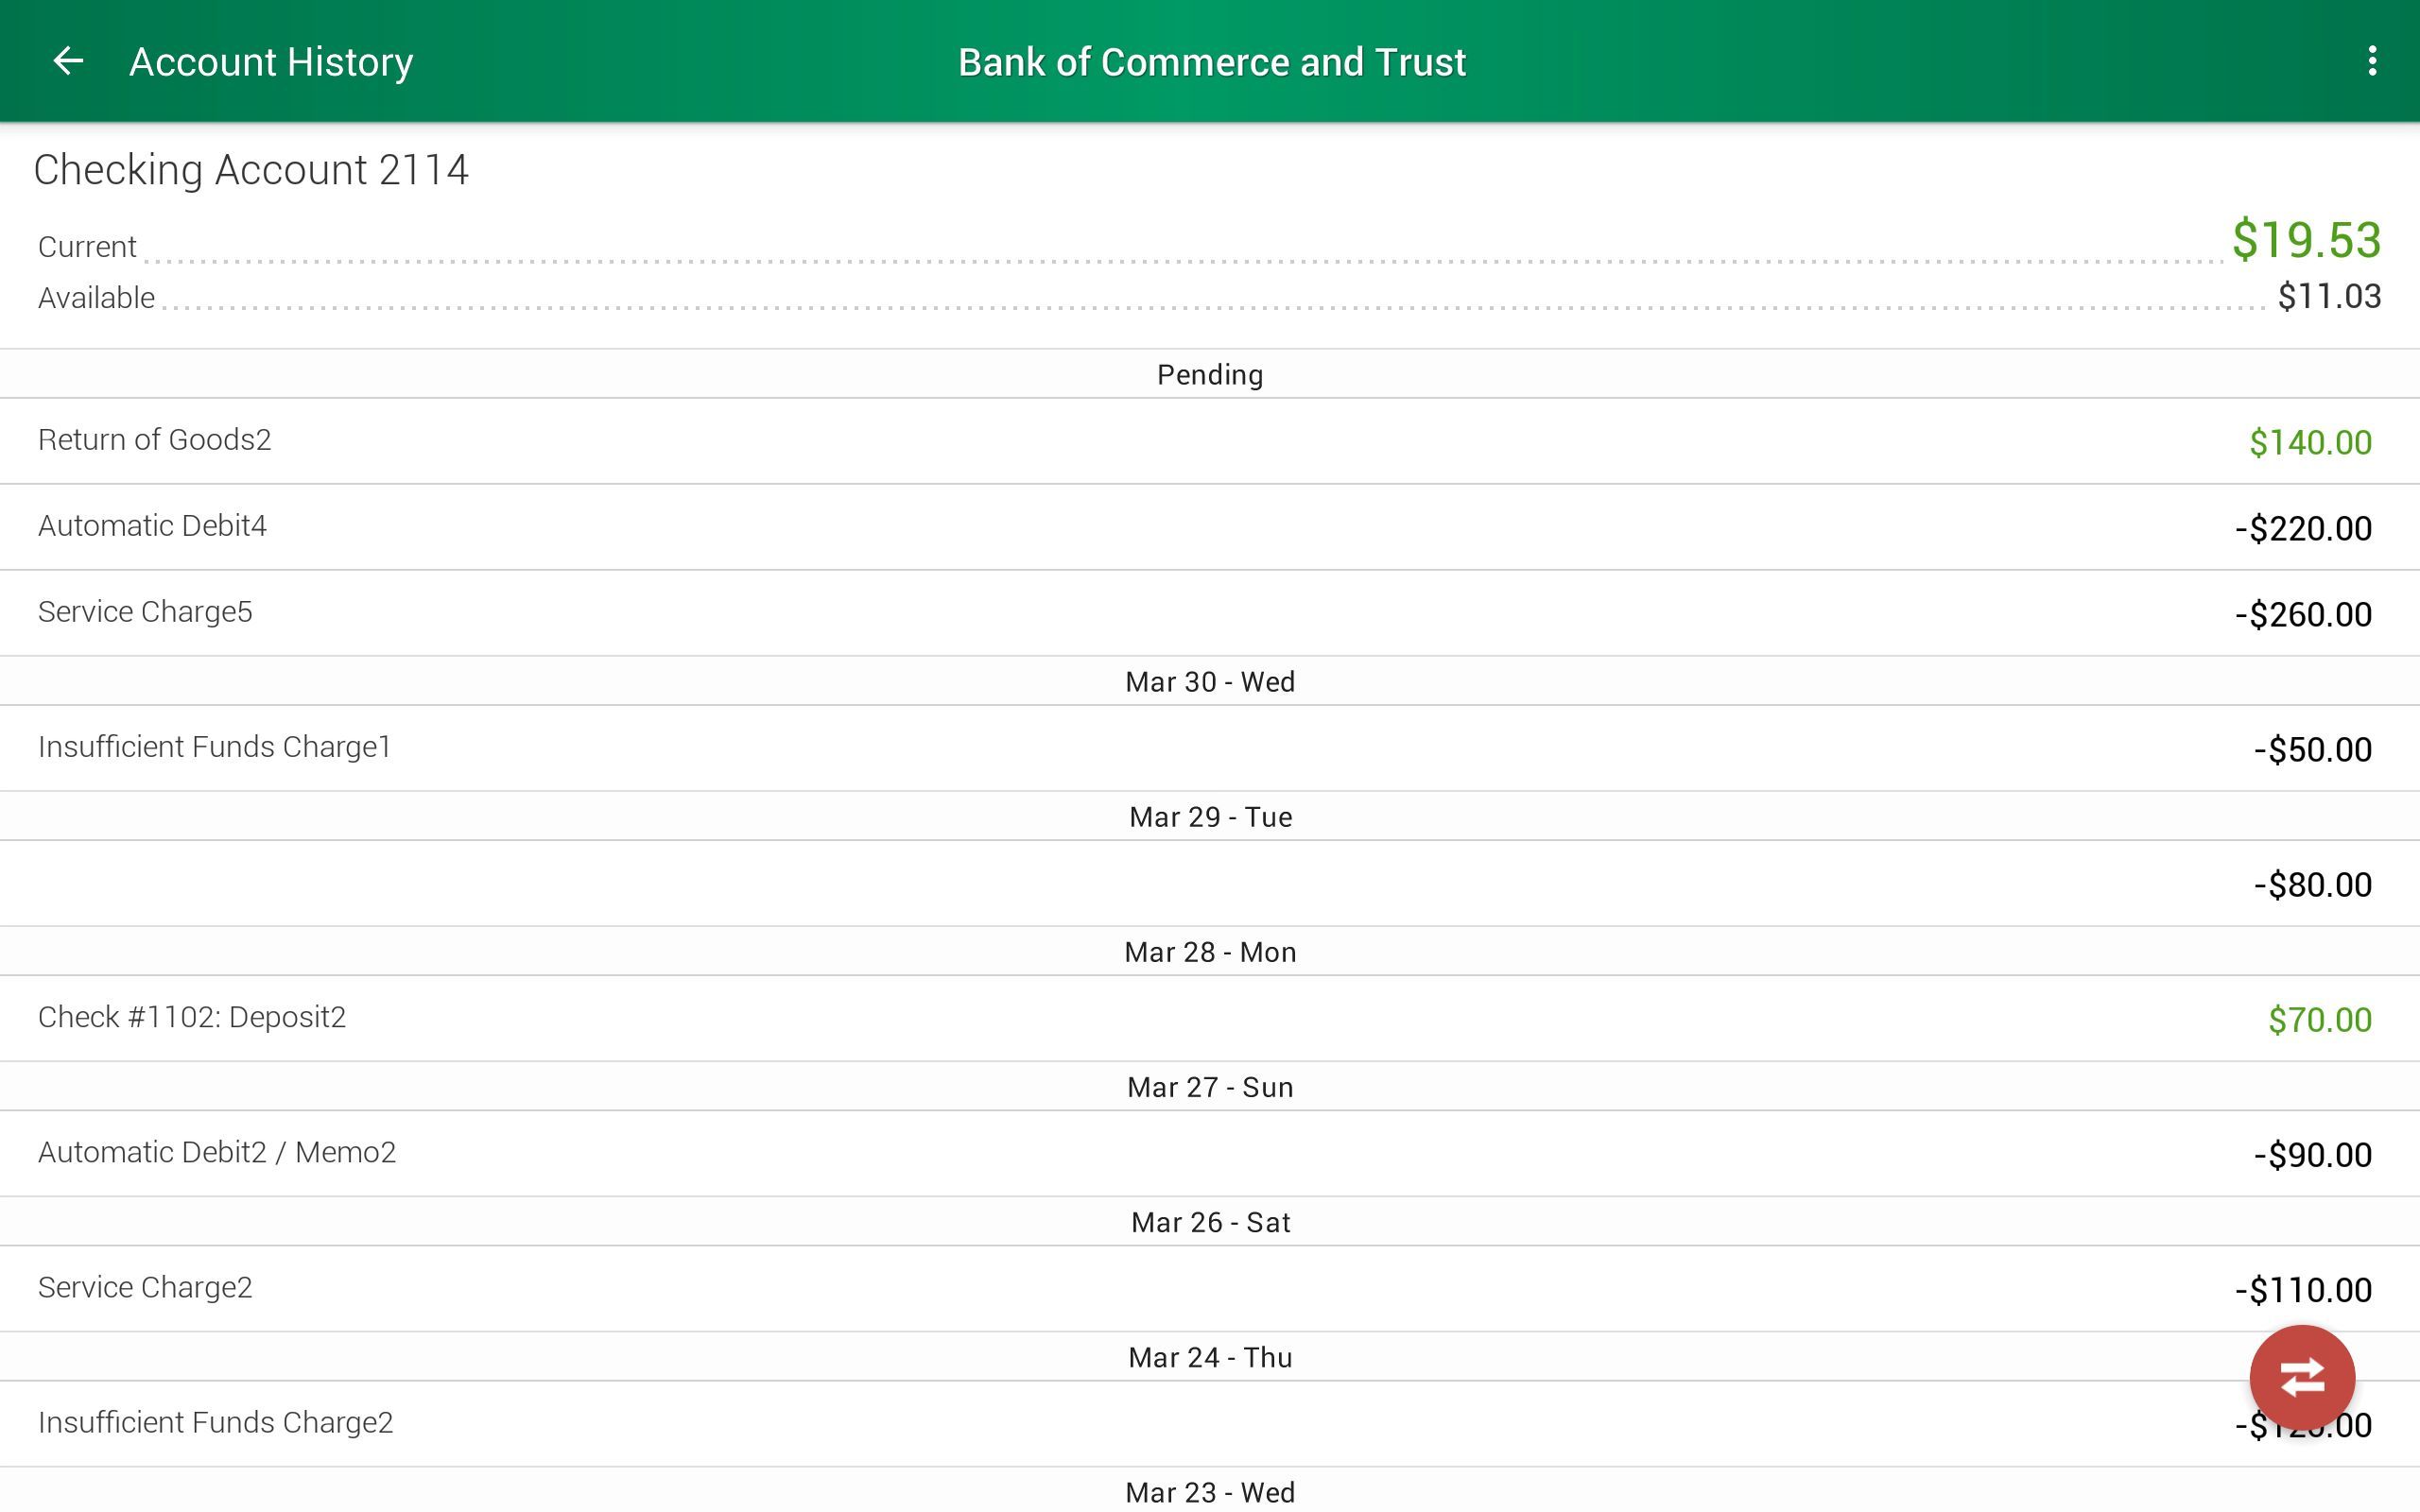 Bank of Commerce & Trust